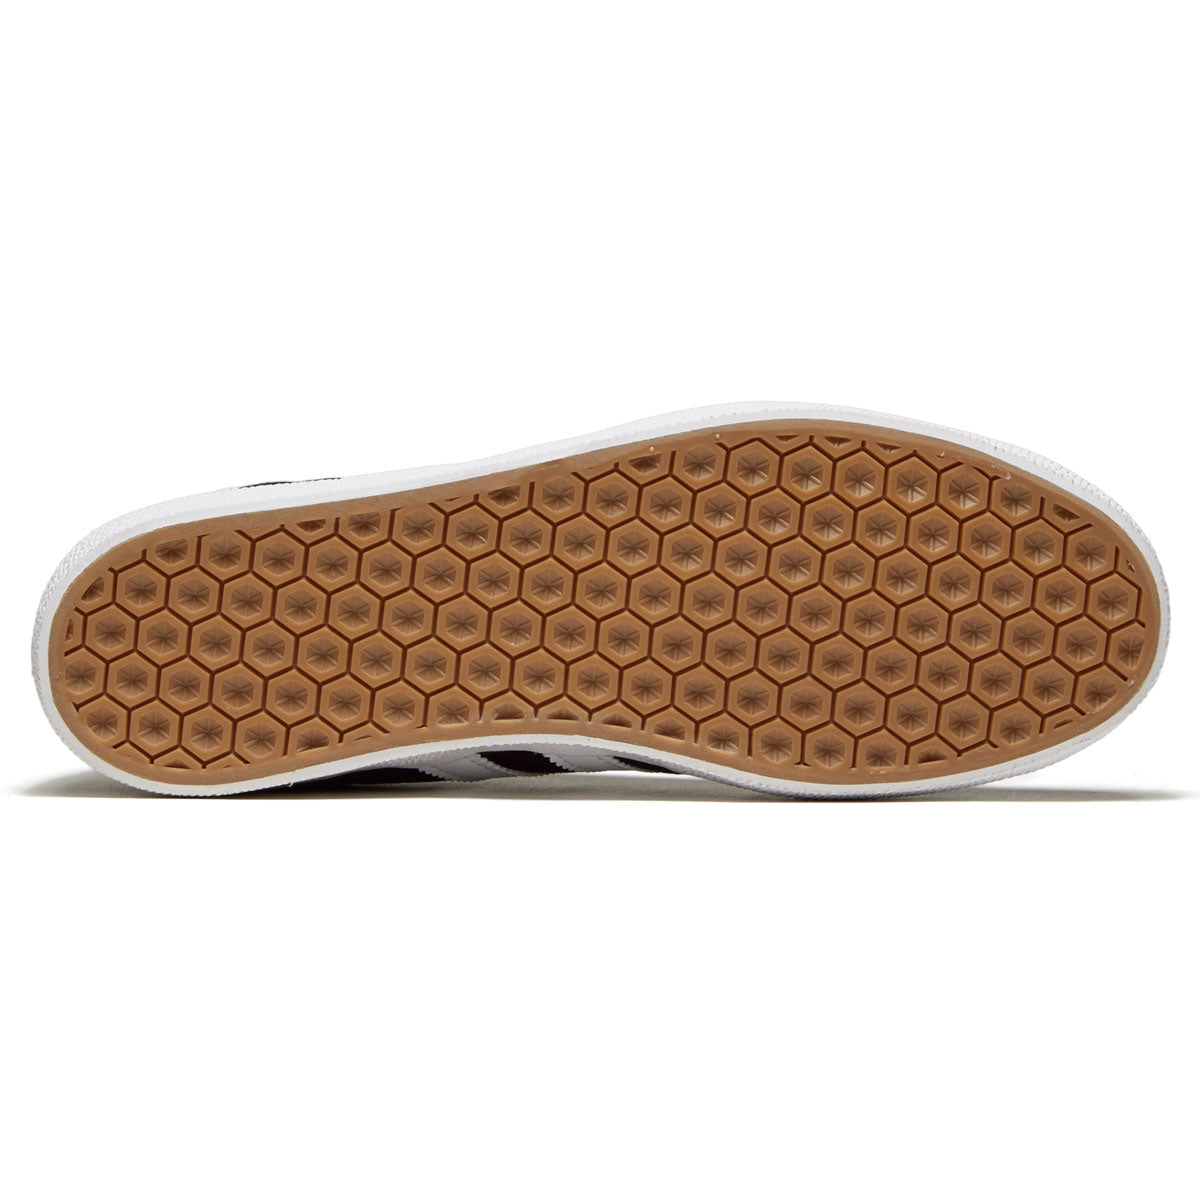 Adidas Gazelle Adv Shoes - Core Black/White/Gold Metallic image 4